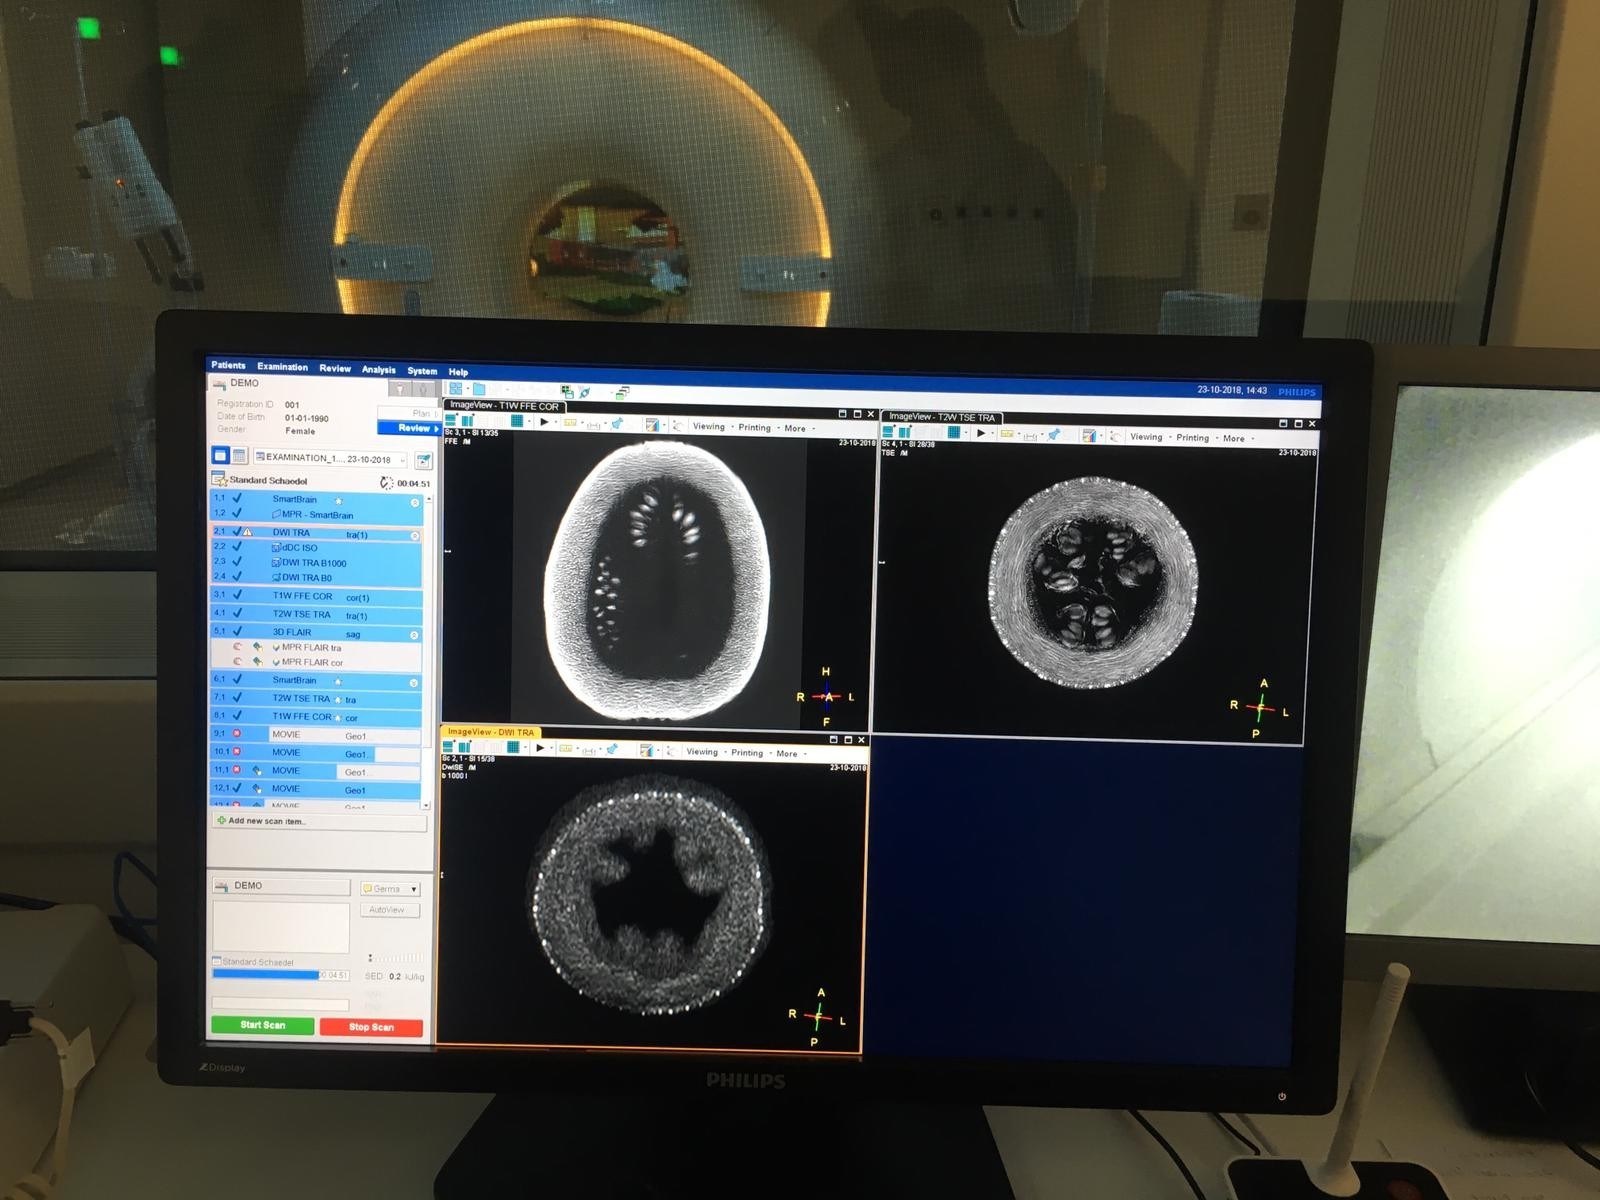 This is what a banana looks like in an MRI, 1.5 Tesla - My, Radiology, MRI, The medicine, Banana